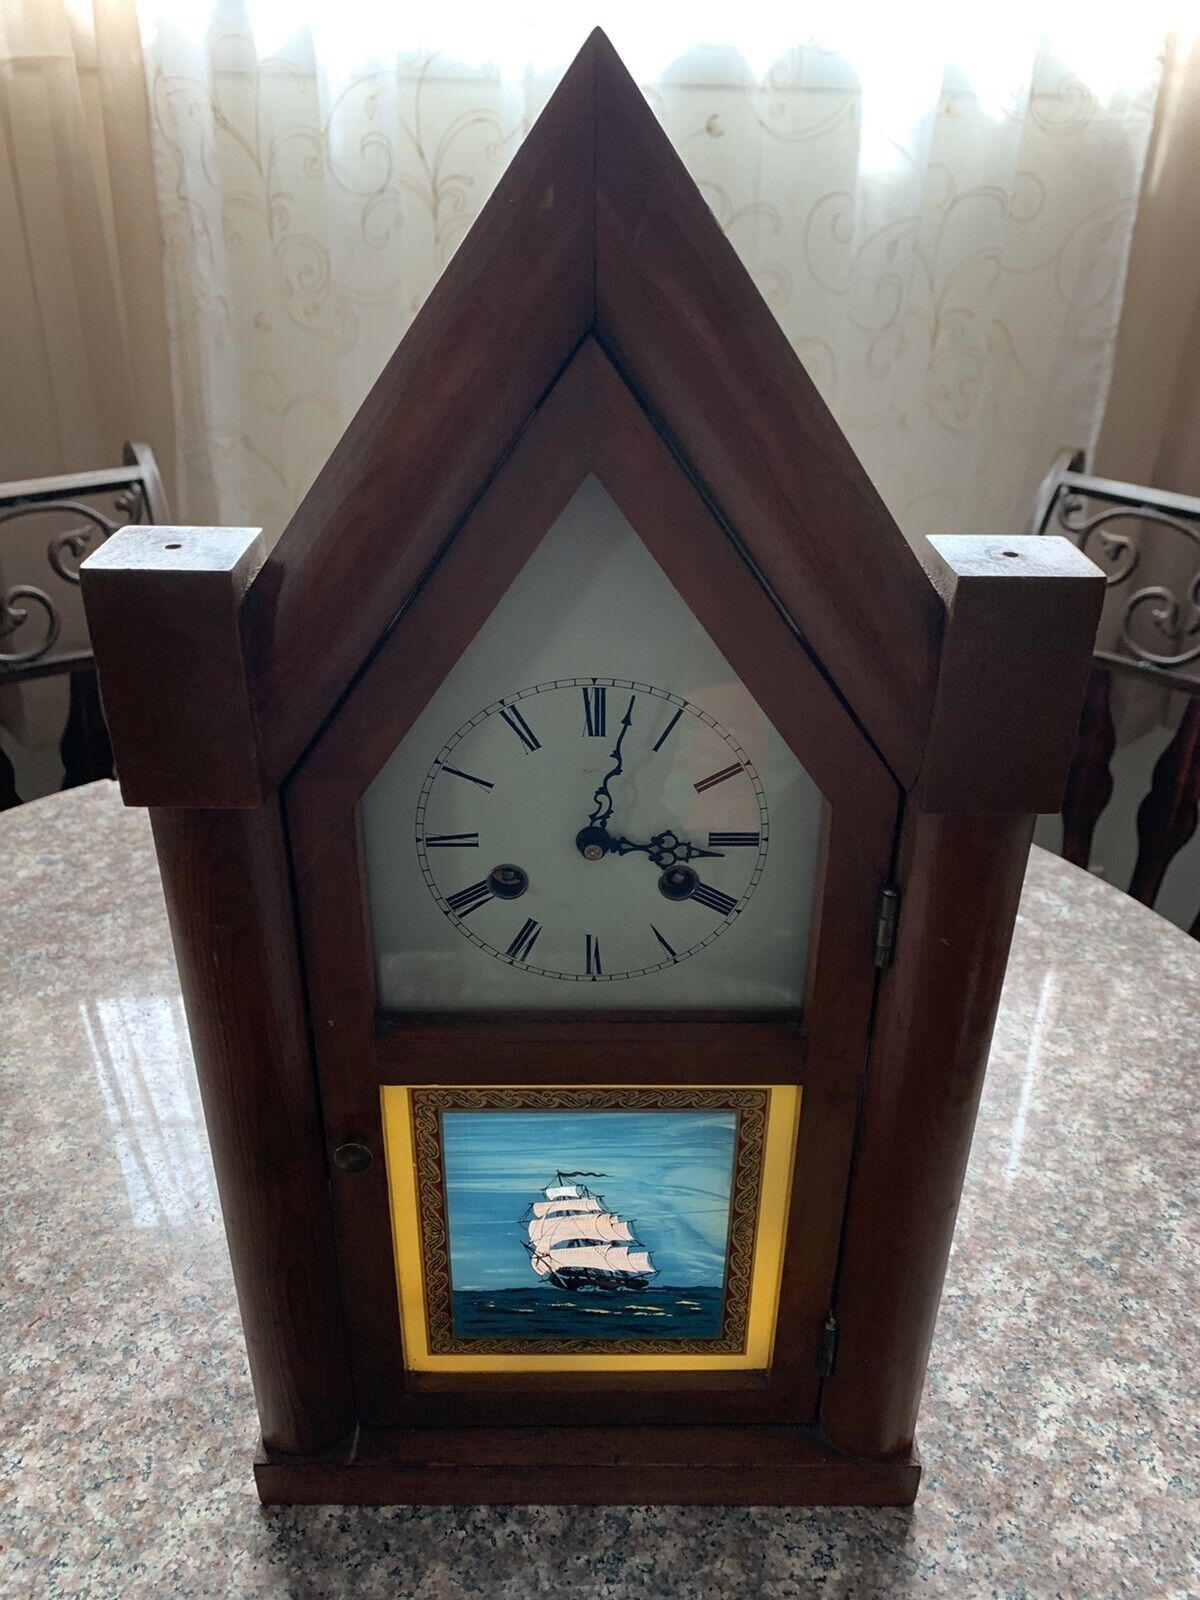 Vintage Mason & Sullivan Mantel Mantle Steeple Clock untested but does chime